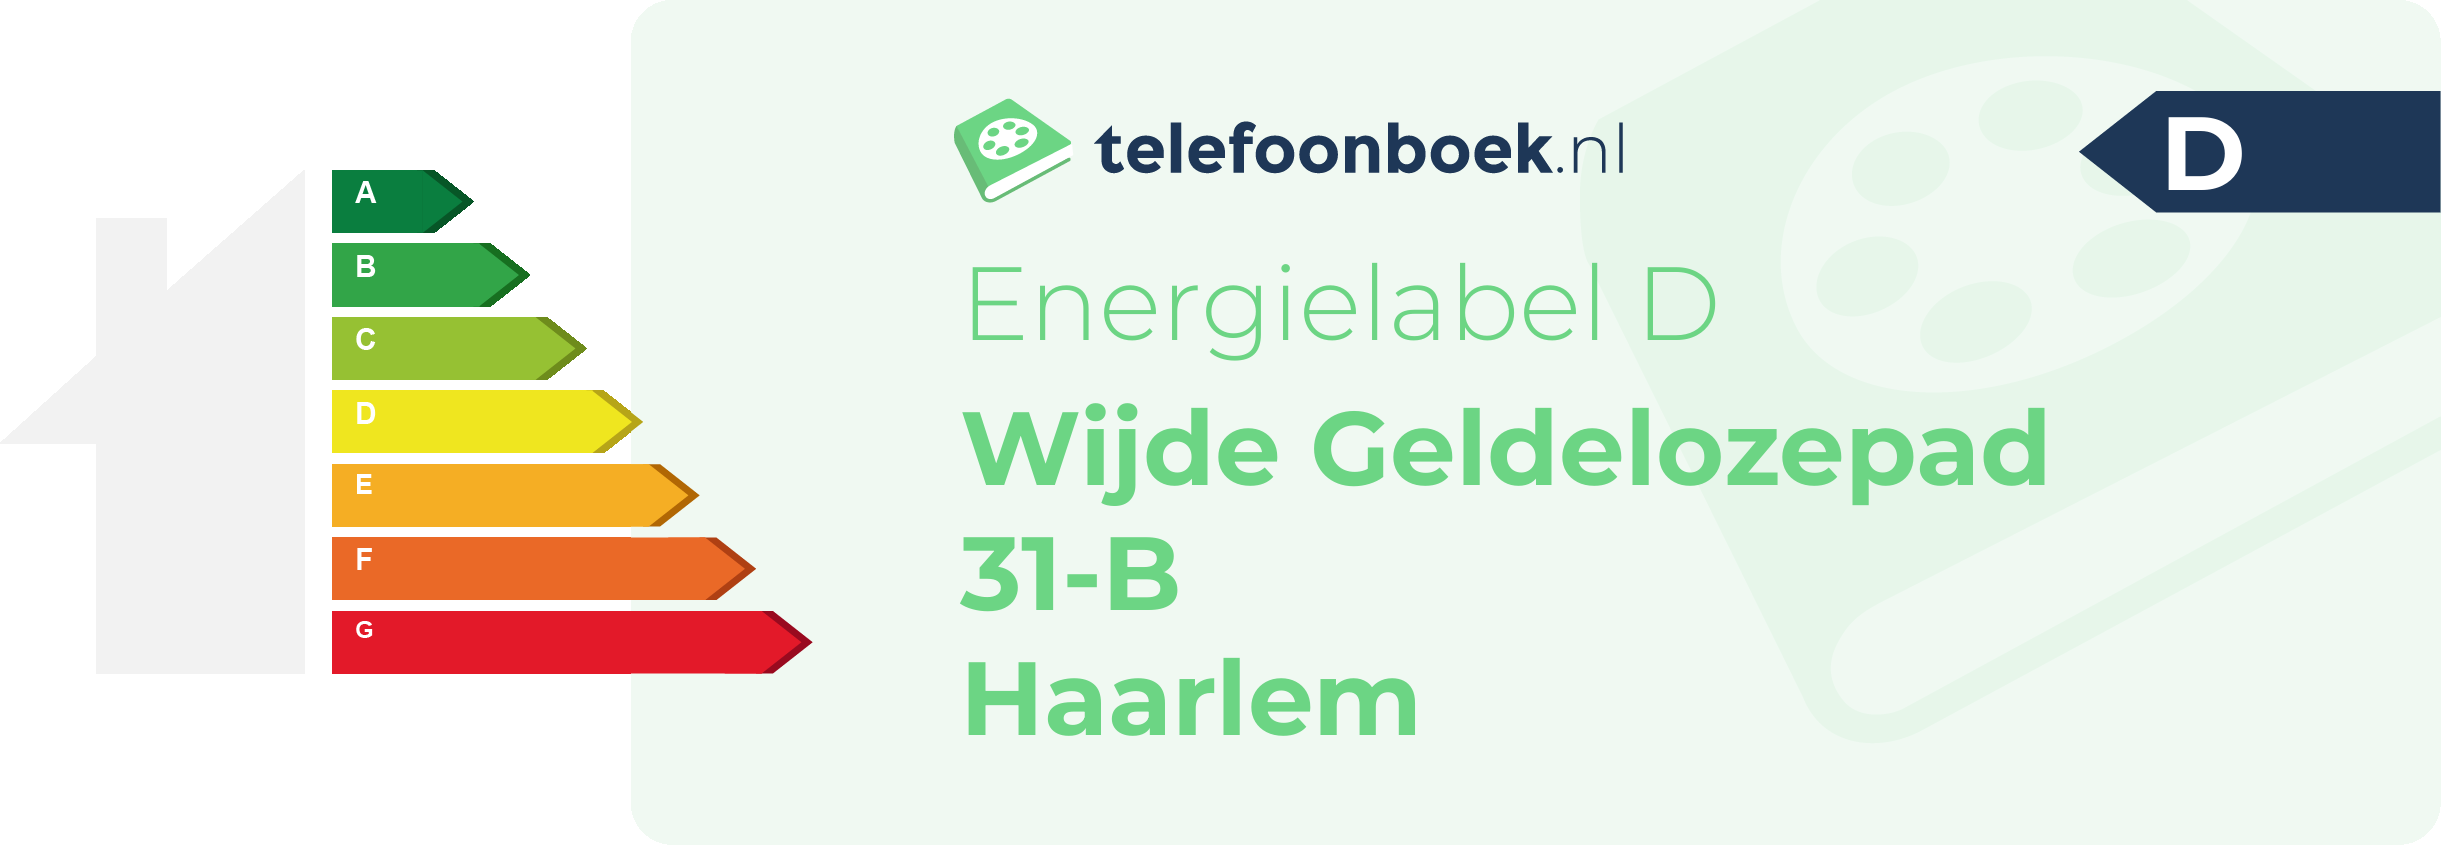 Energielabel Wijde Geldelozepad 31-B Haarlem